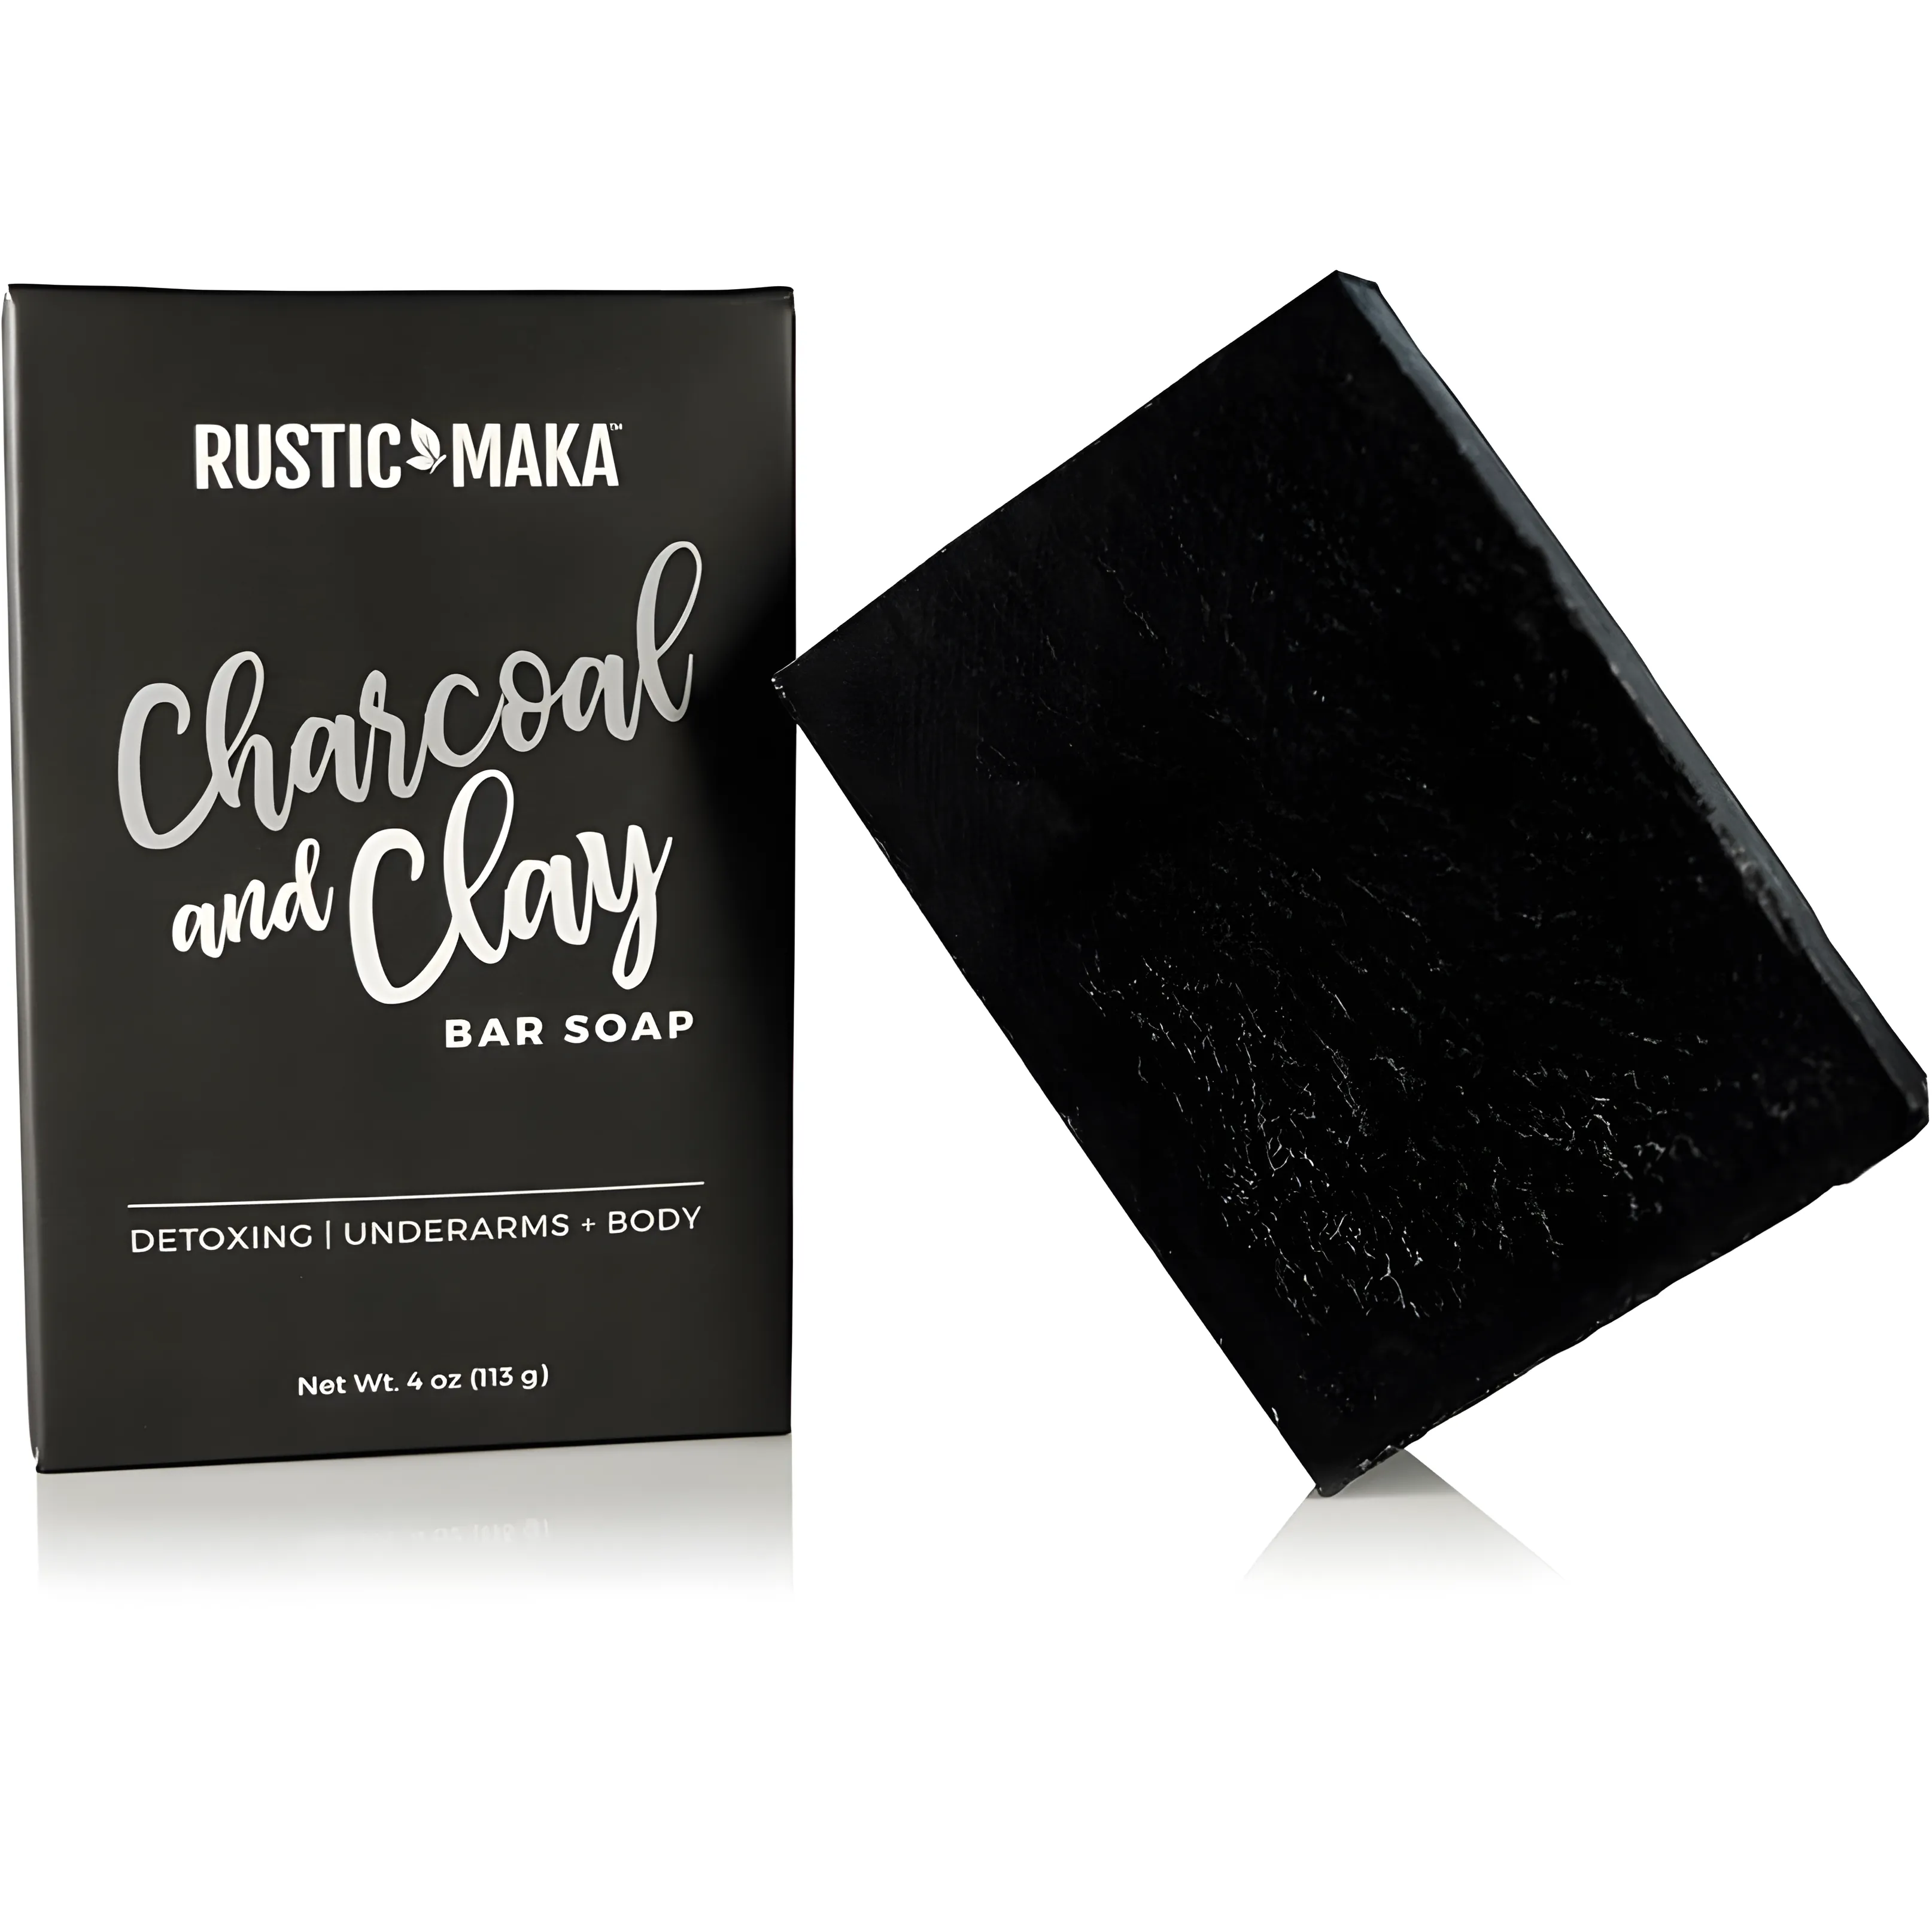 Free Charcoal + Clay Bar Soap